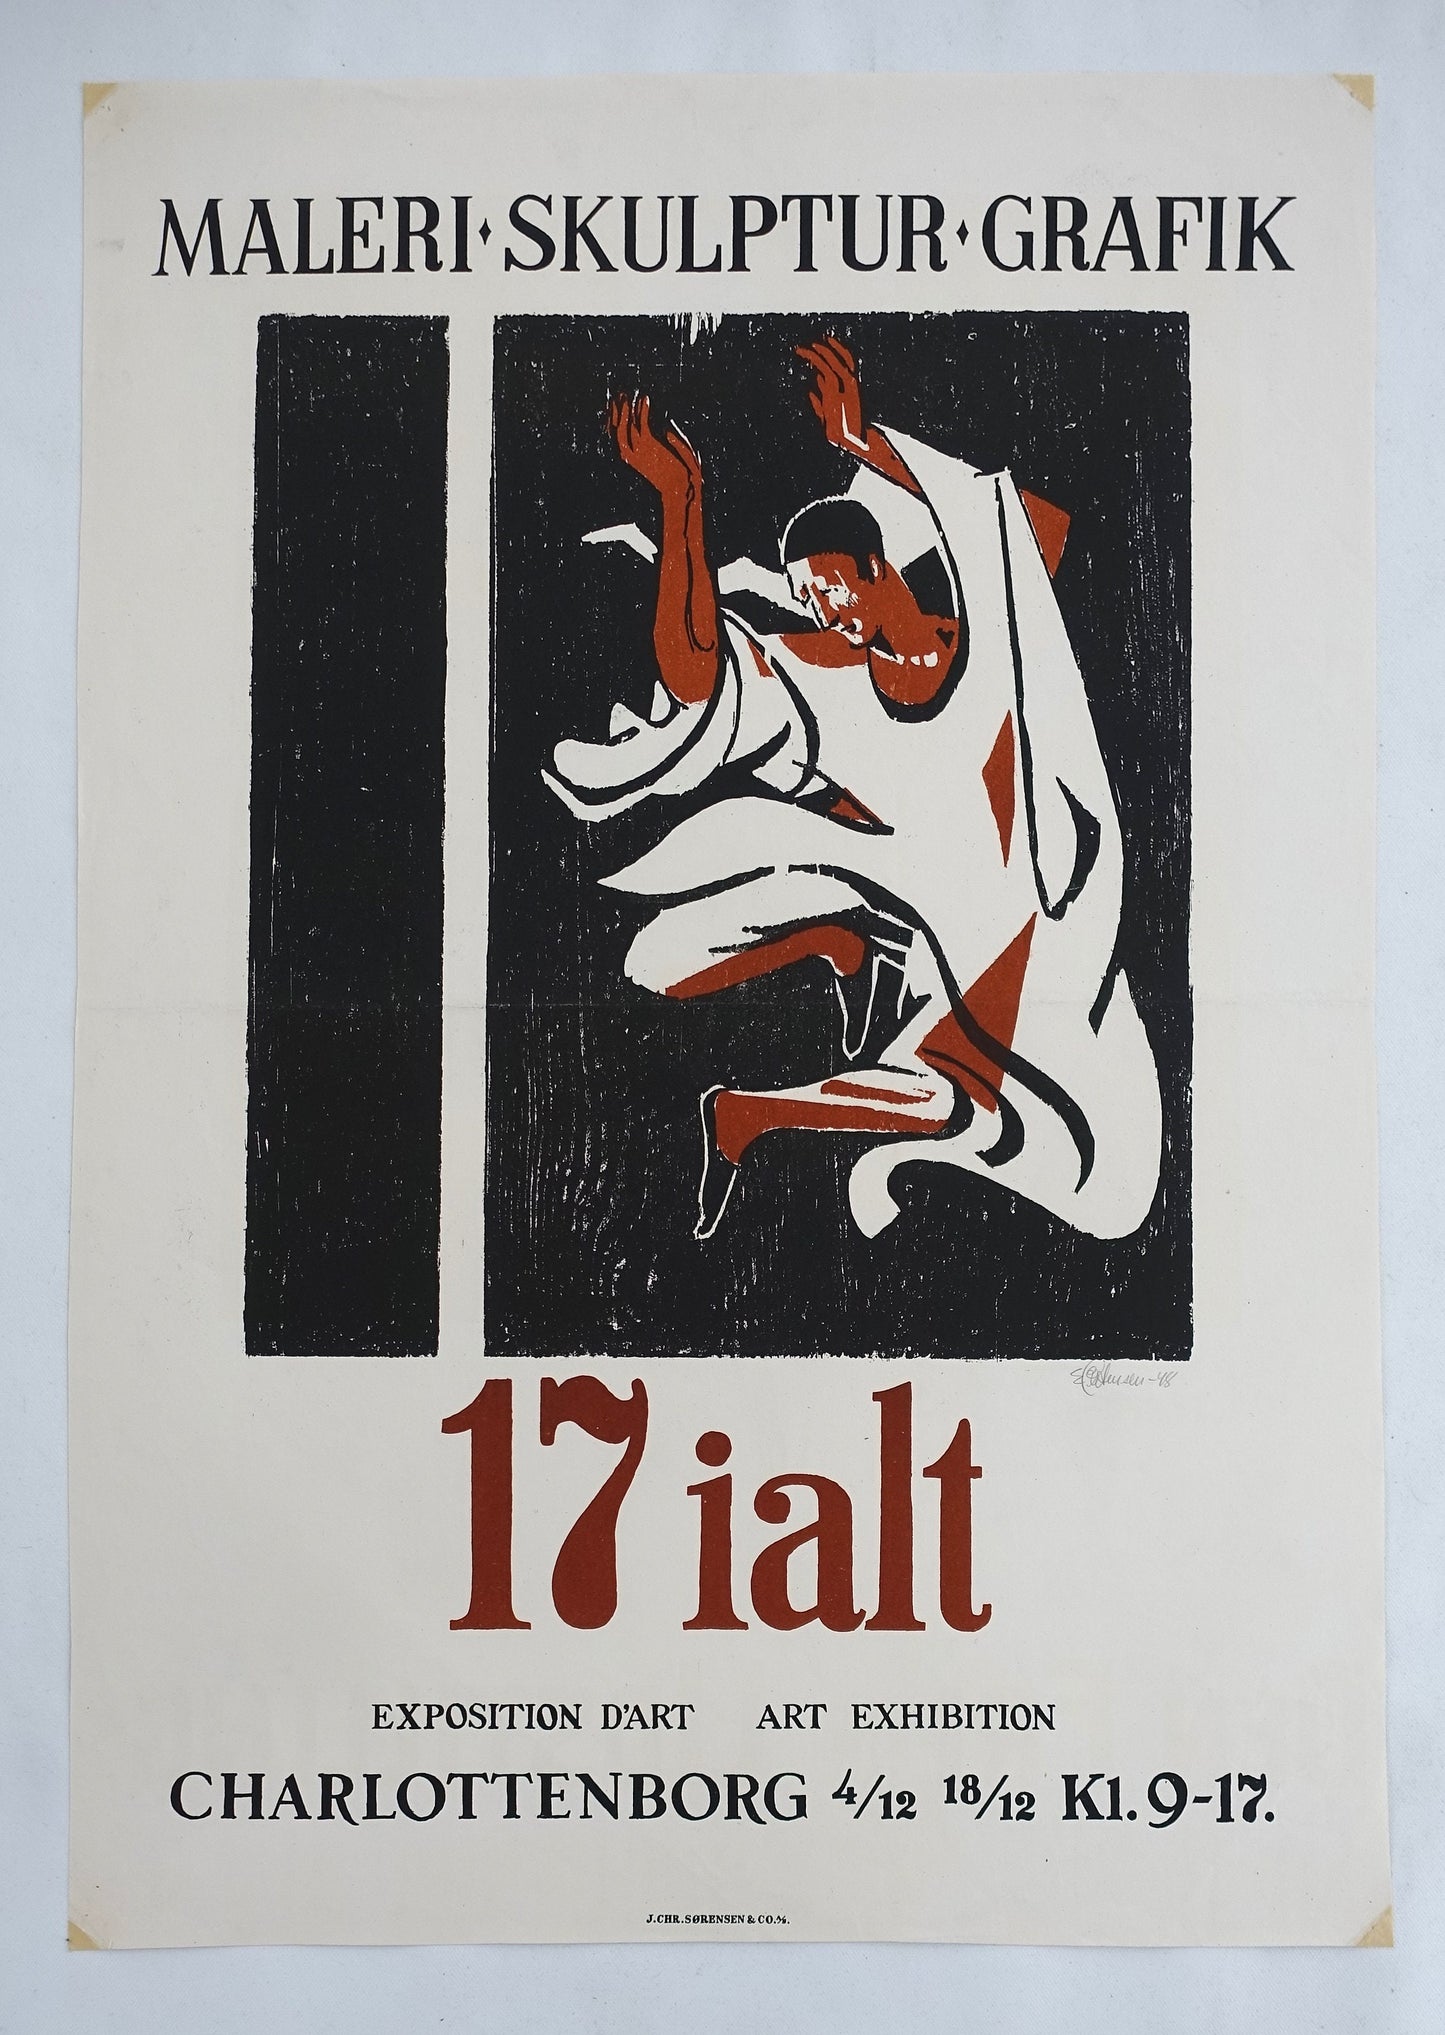 1948 Danish Arts Exhibition Poster Charlottenborg - Original Vintage Poster